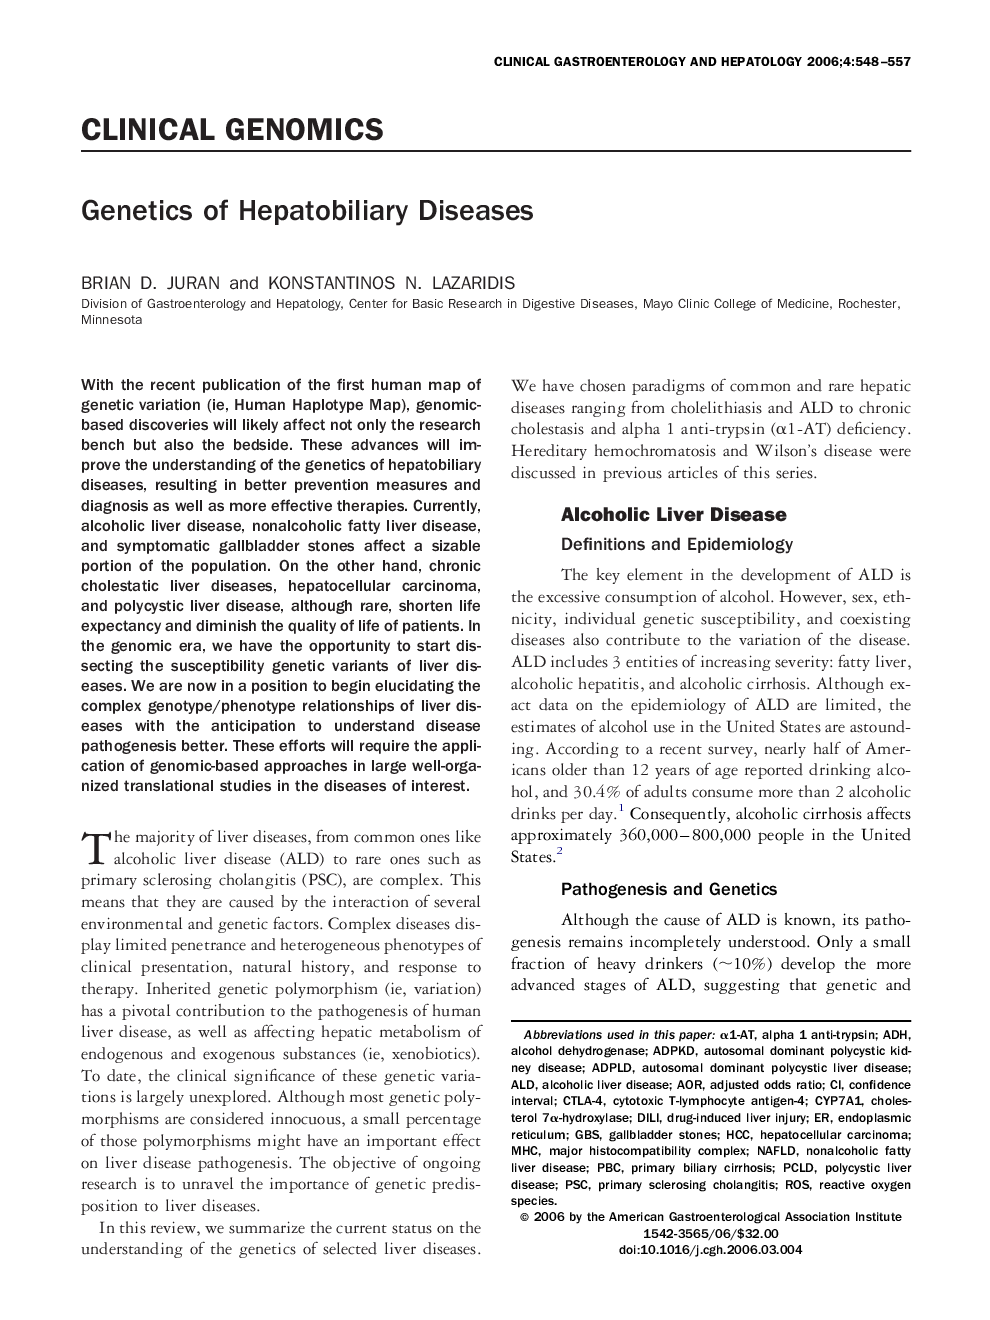 Genetics of Hepatobiliary Diseases